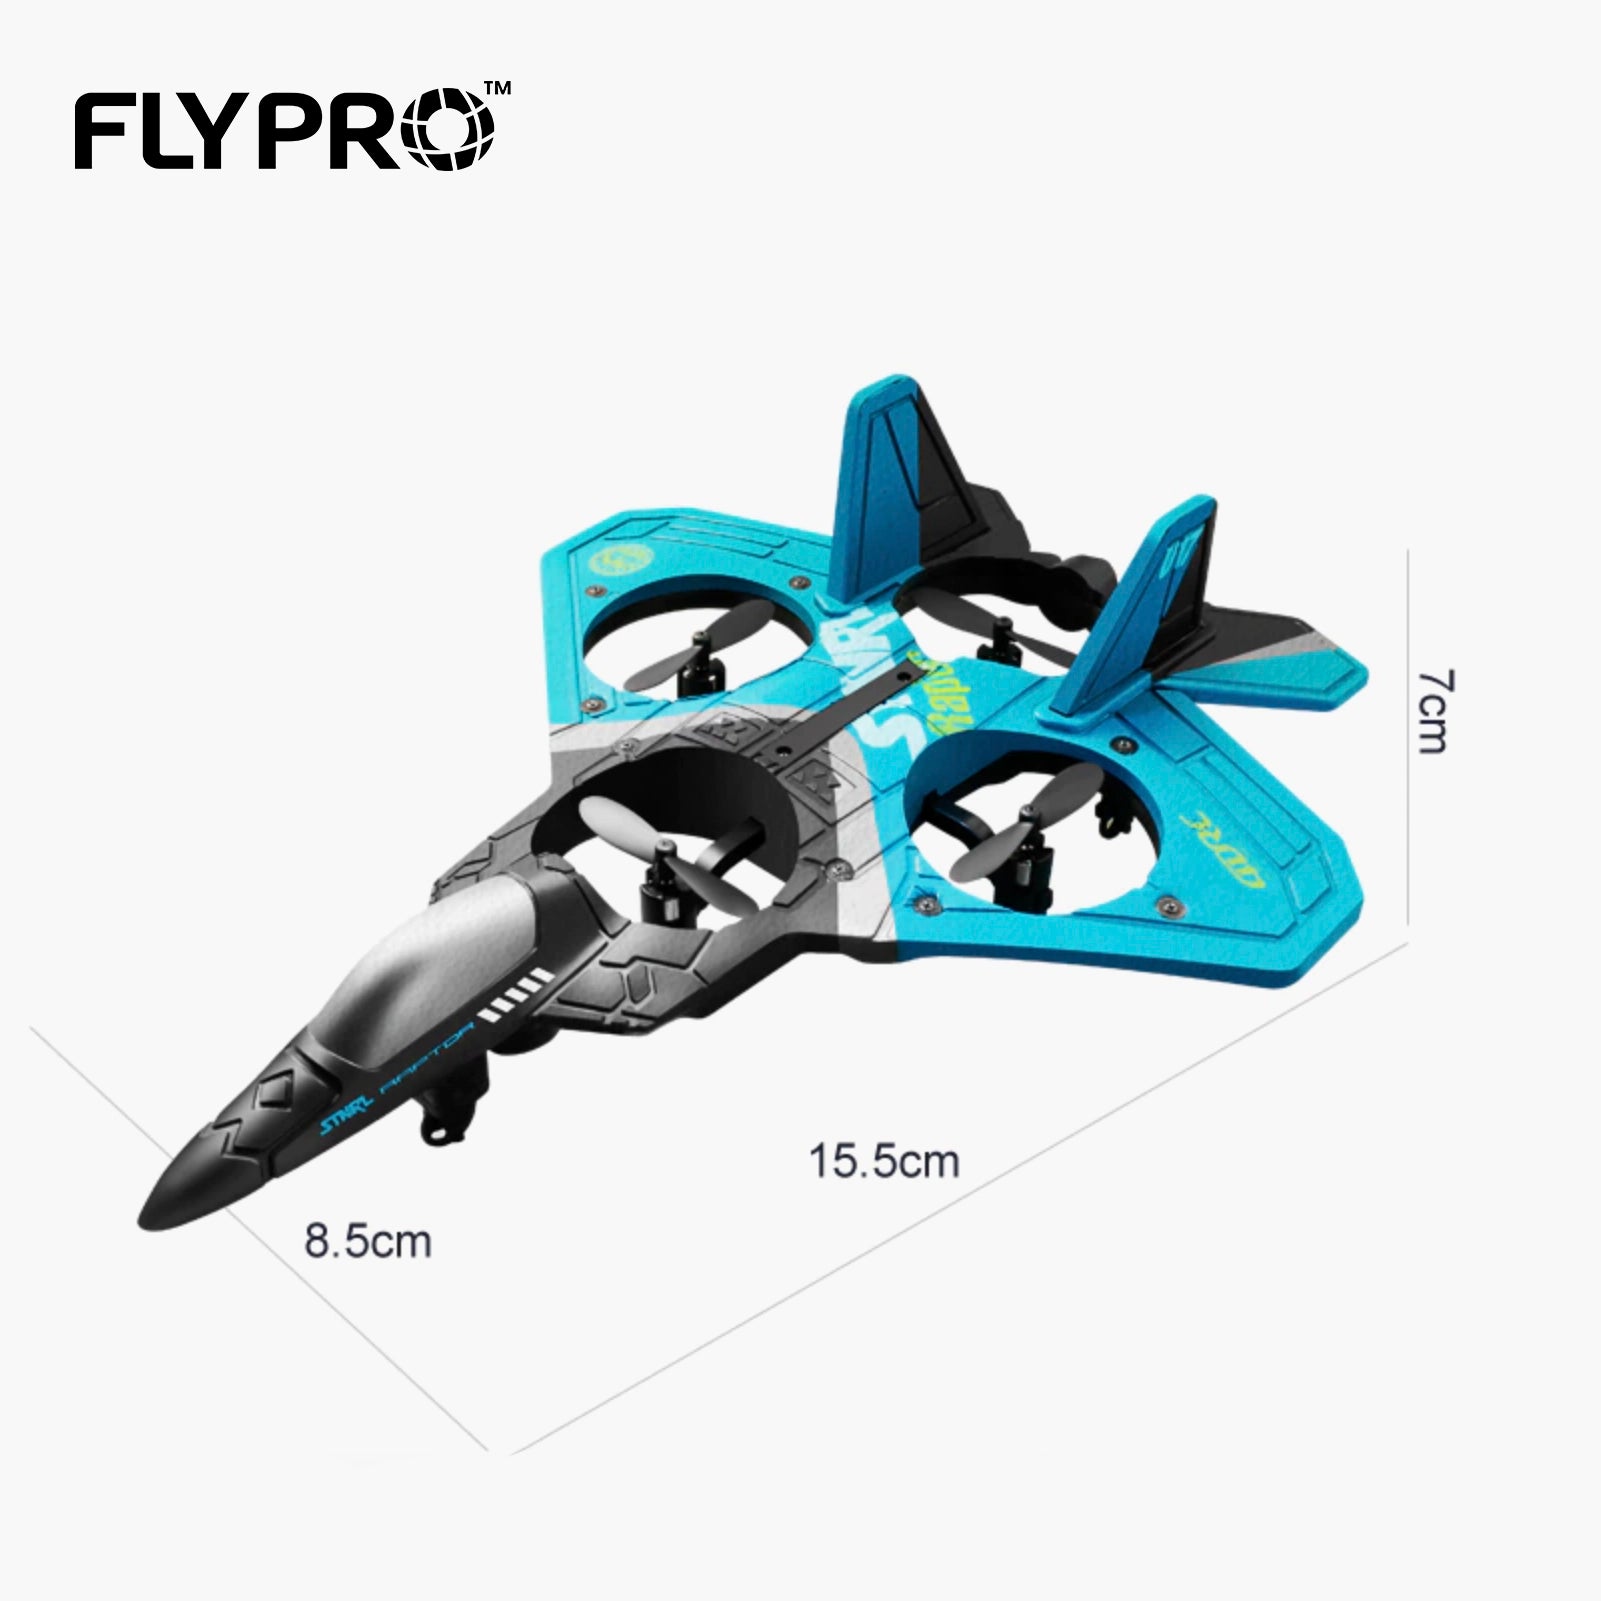 FlyPro™ 